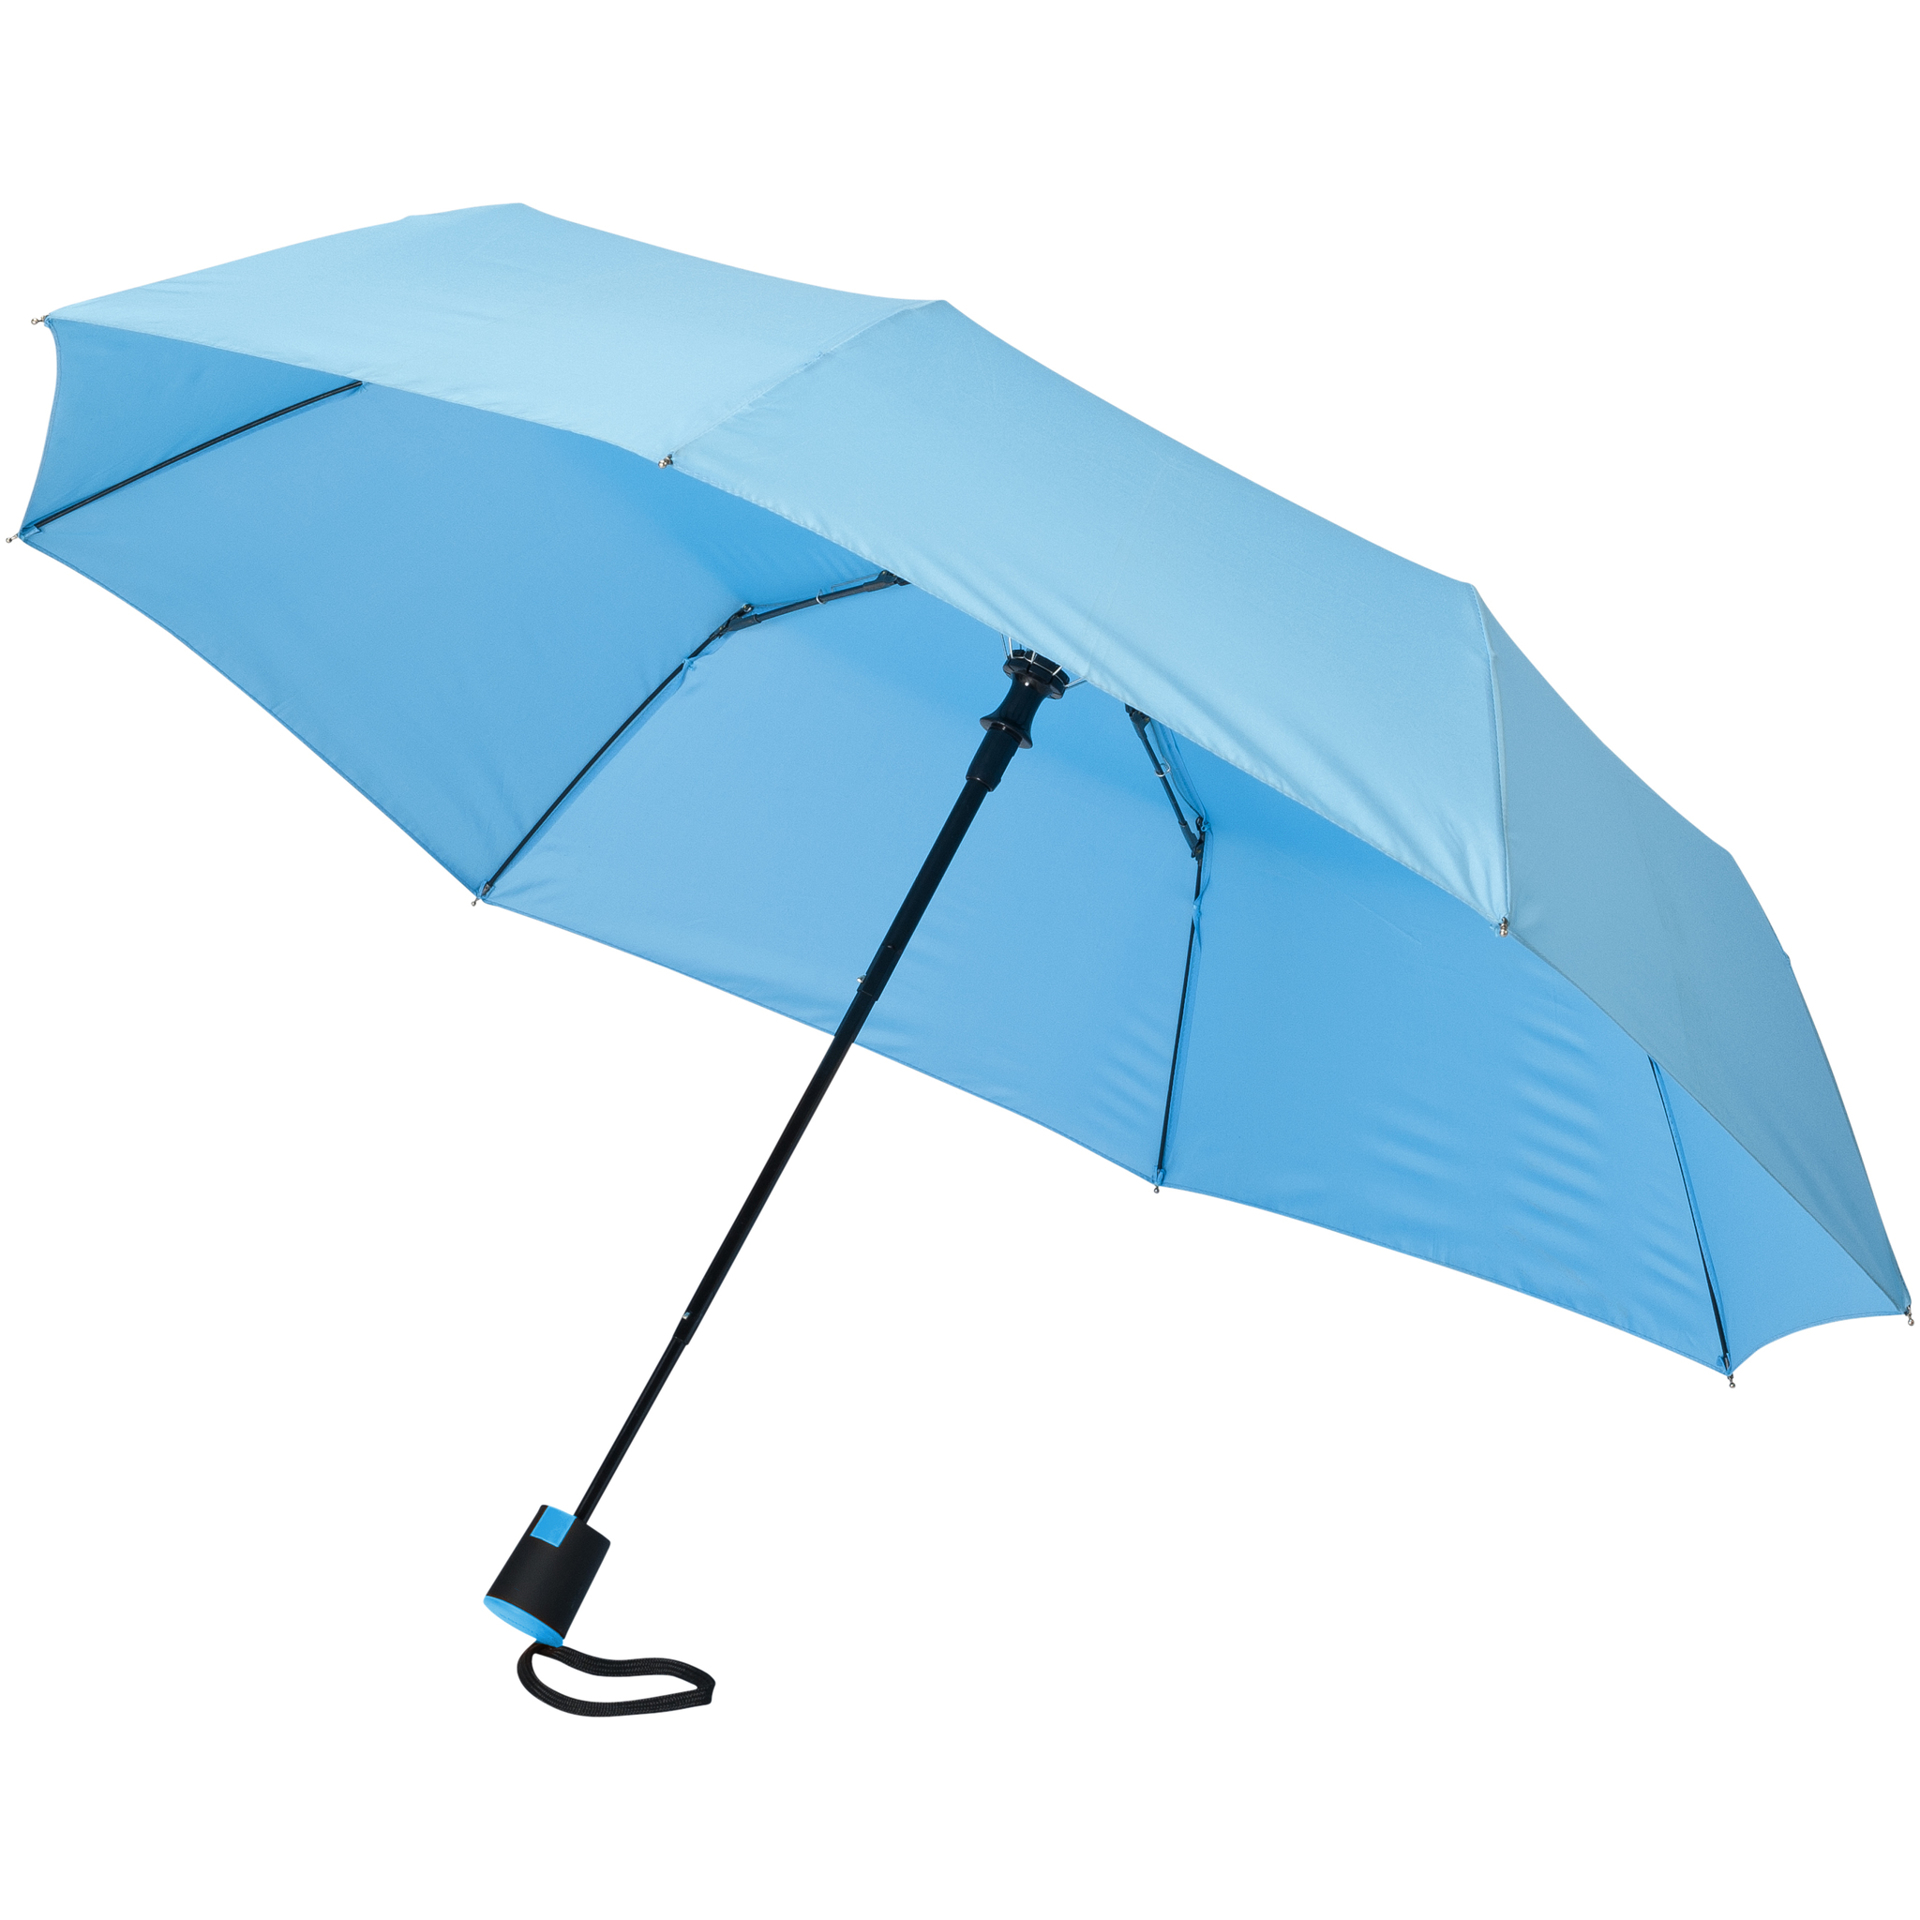 3 Section Auto Open Umbrella in light blue